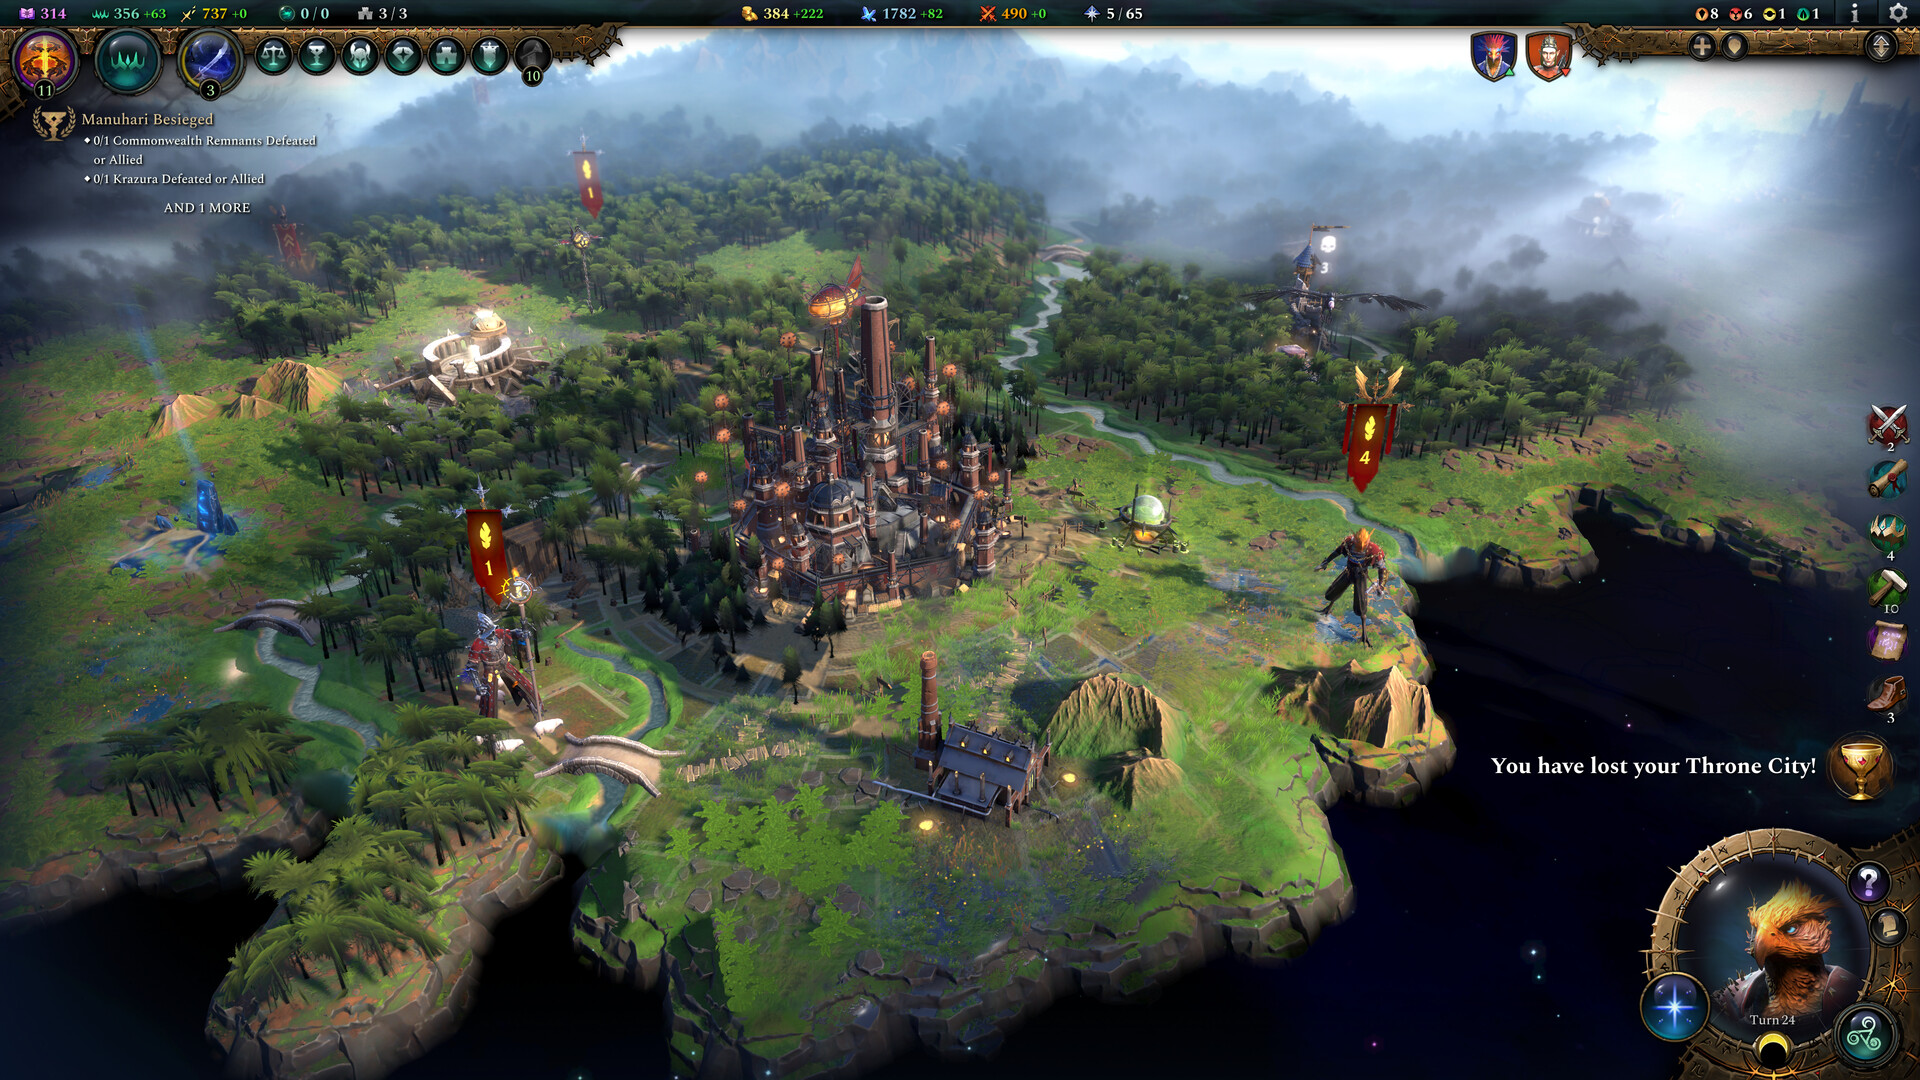 Age Of Wonders 4 - Empires & Ashes DLC EU Steam CD Key